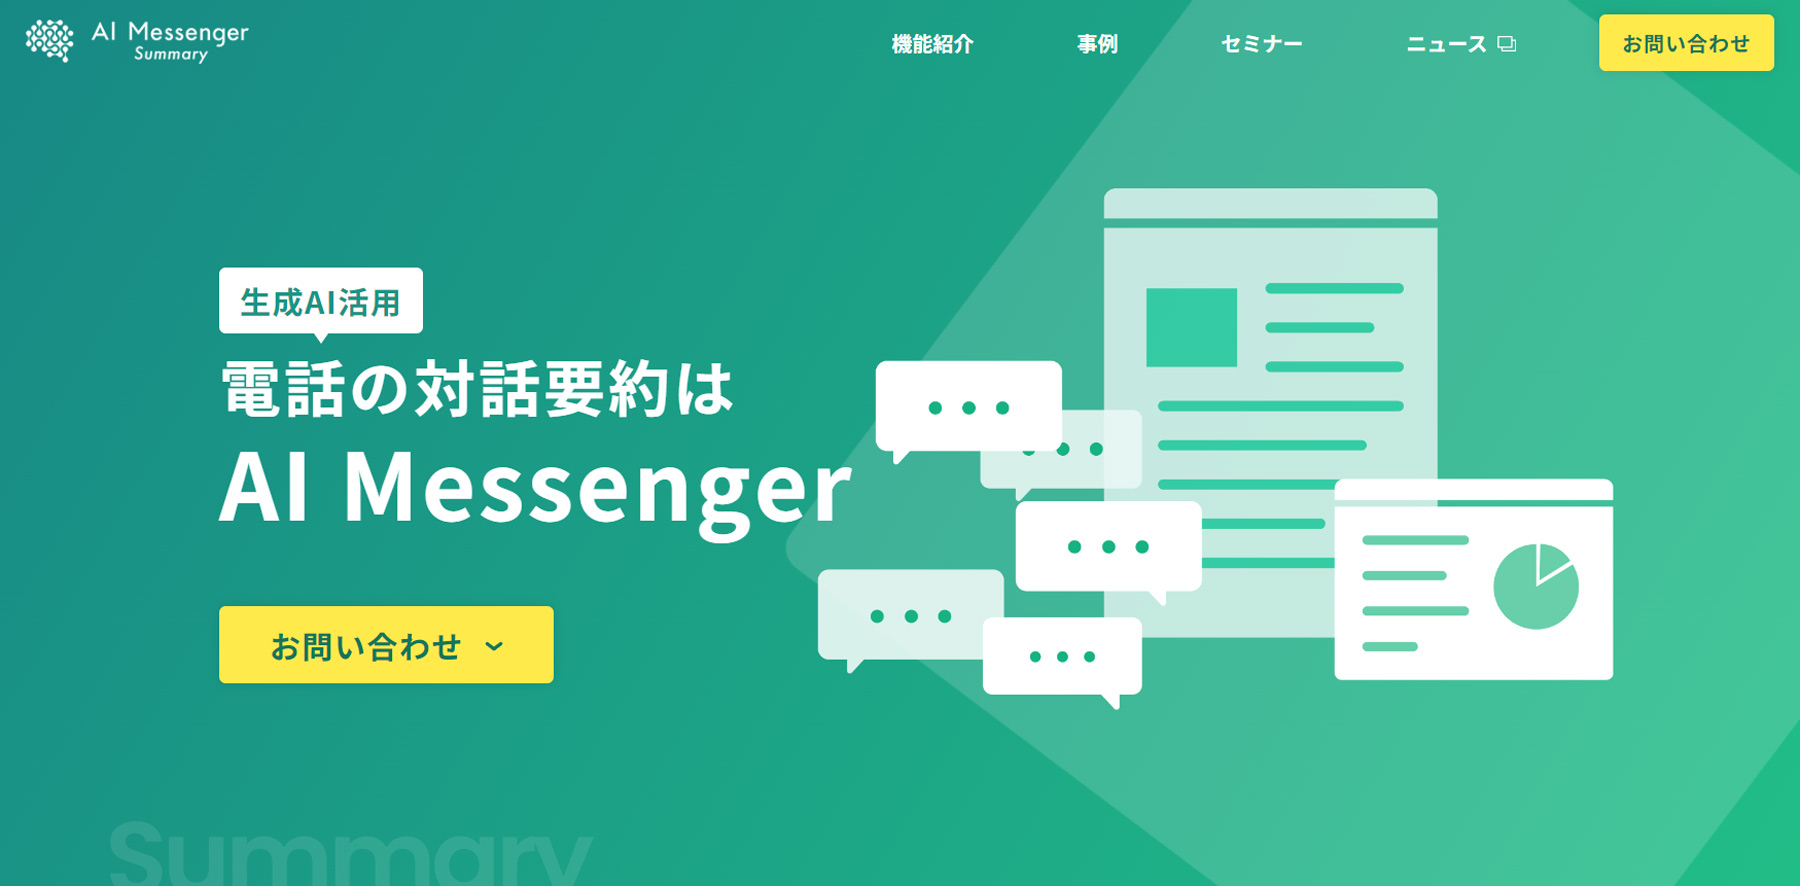 AI Messenger Summary公式Webサイト